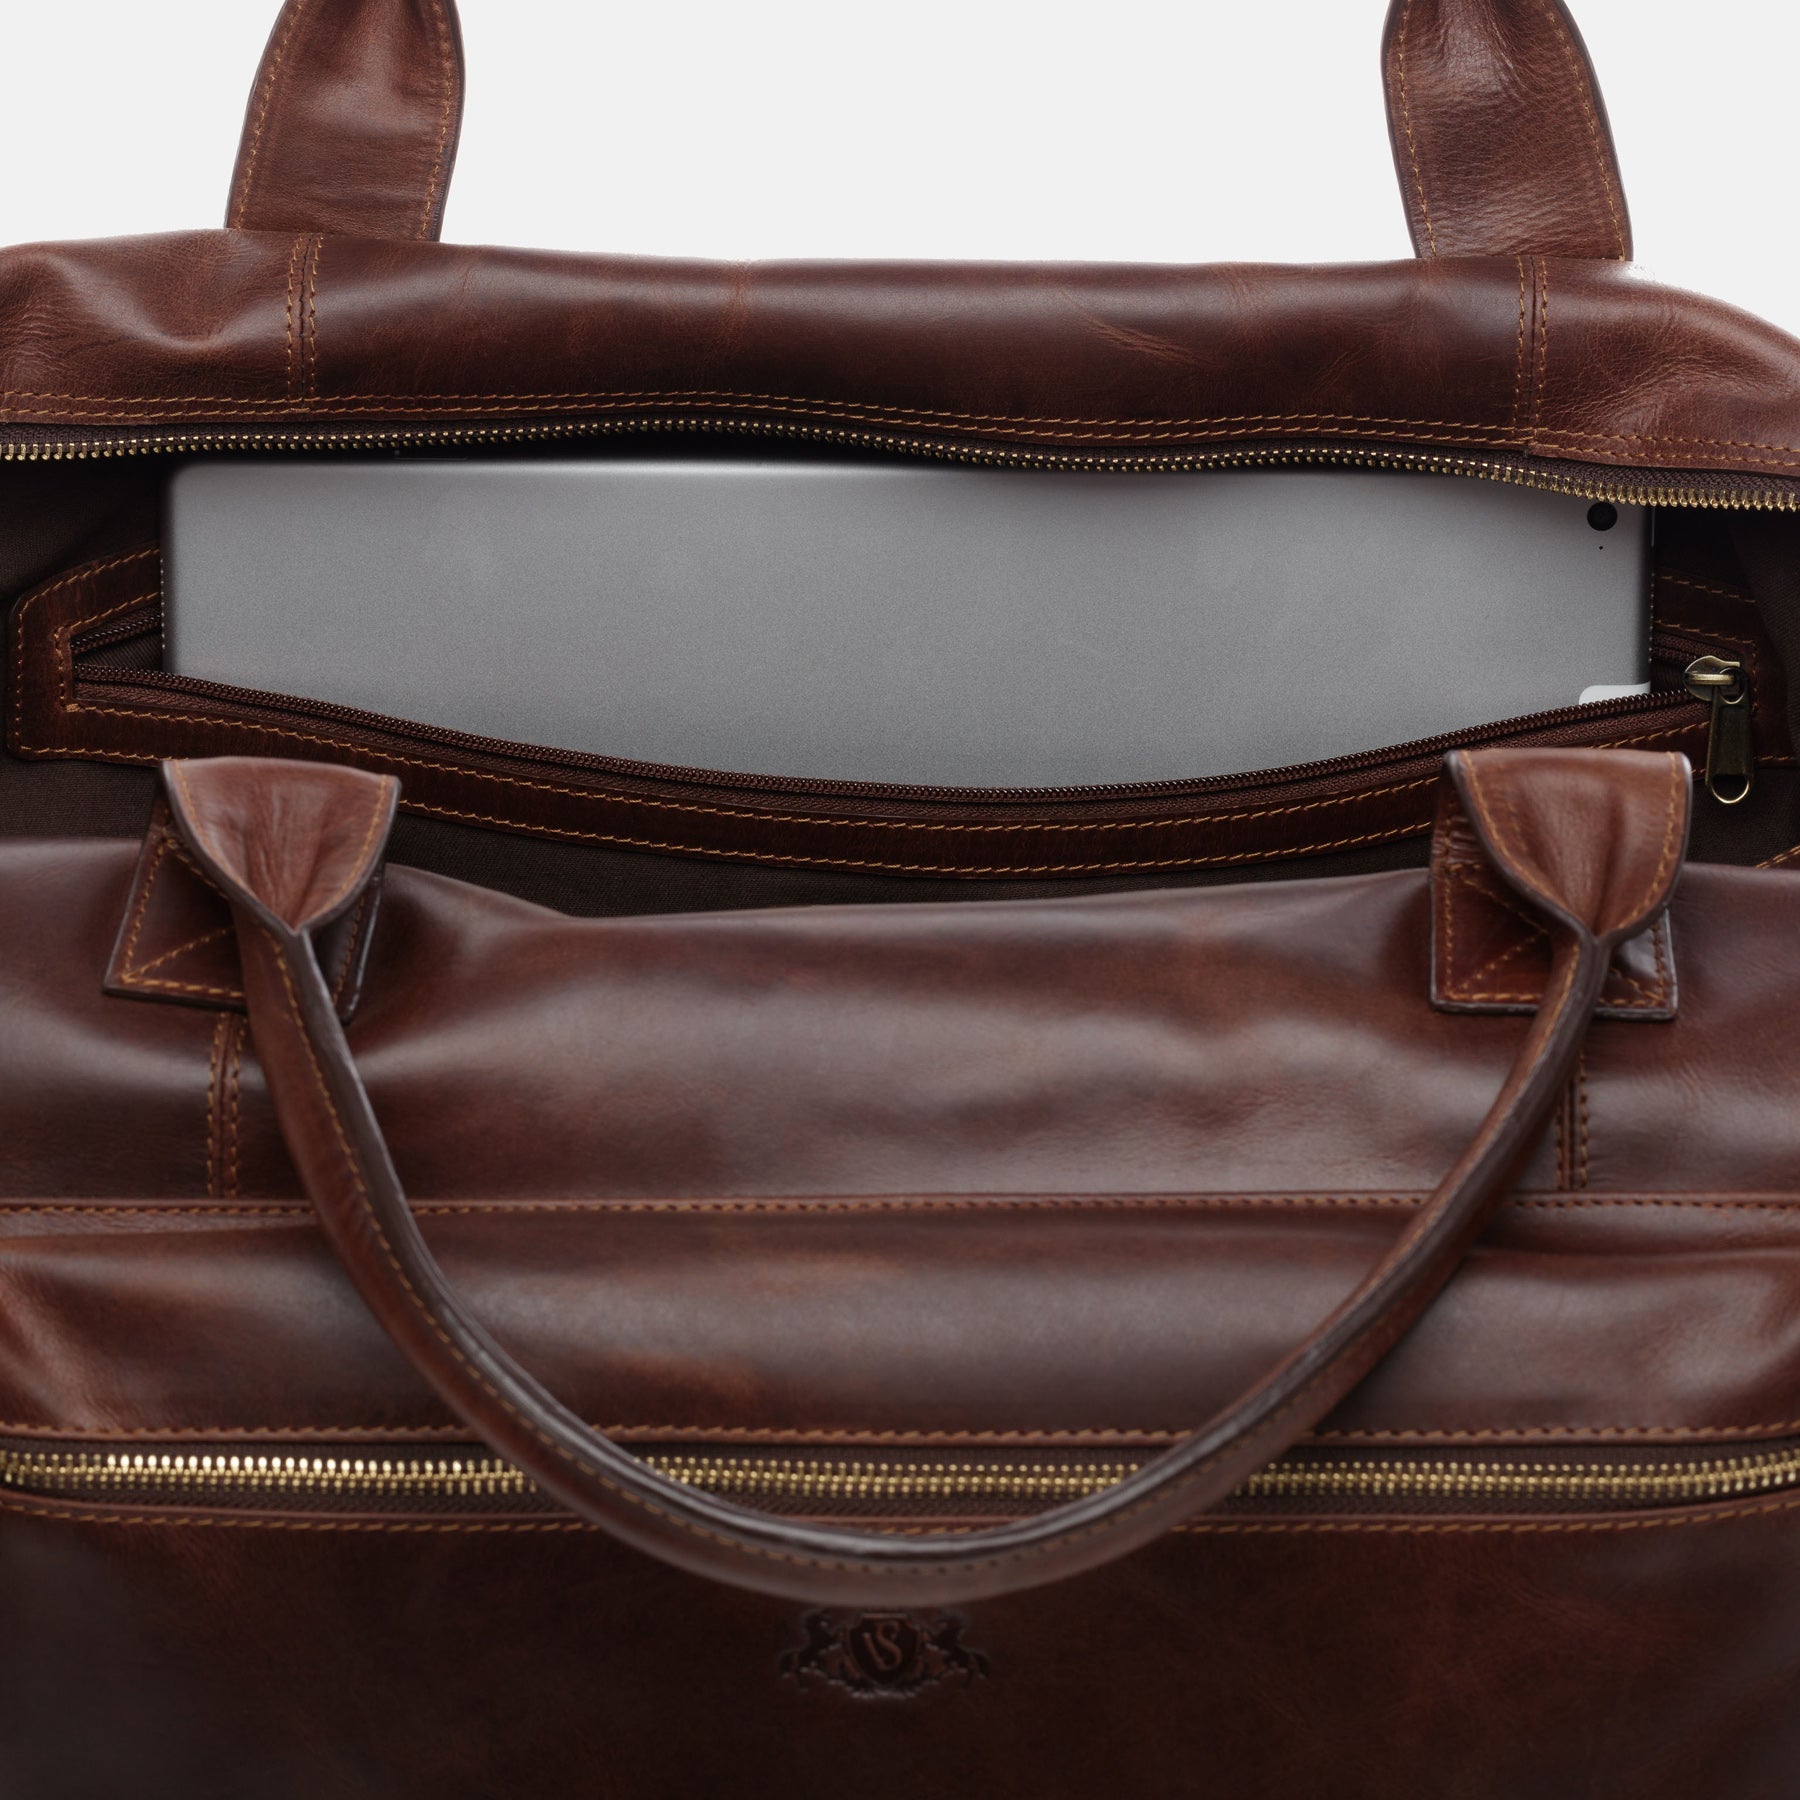 Travel bag BRIXTON natural leather brown